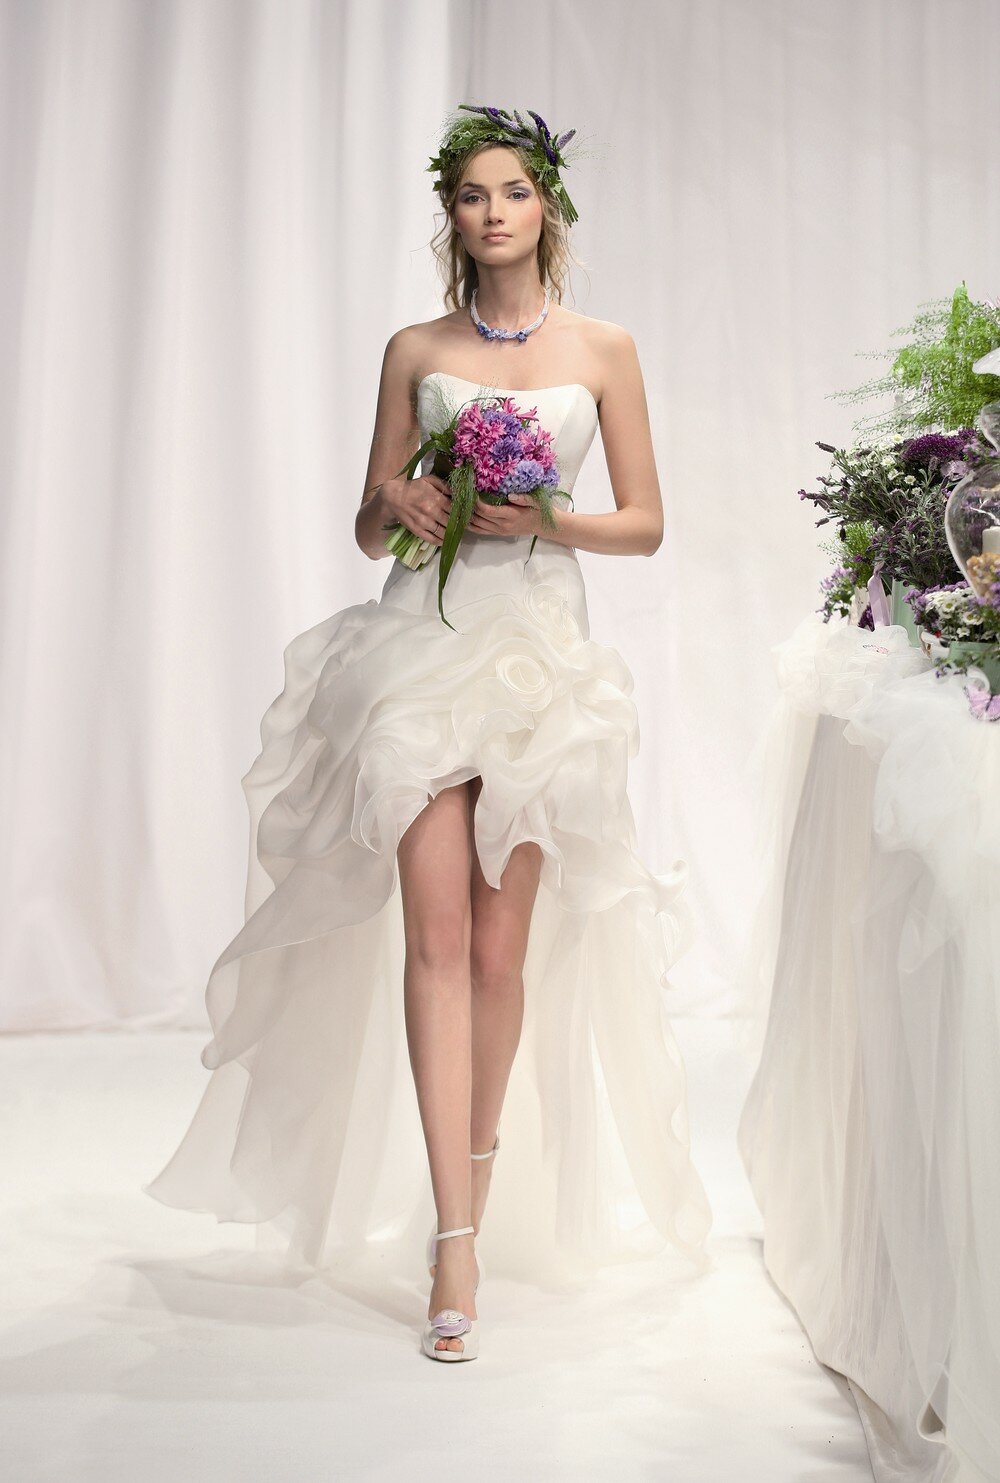 Top wedding dresses designers Photo - 9